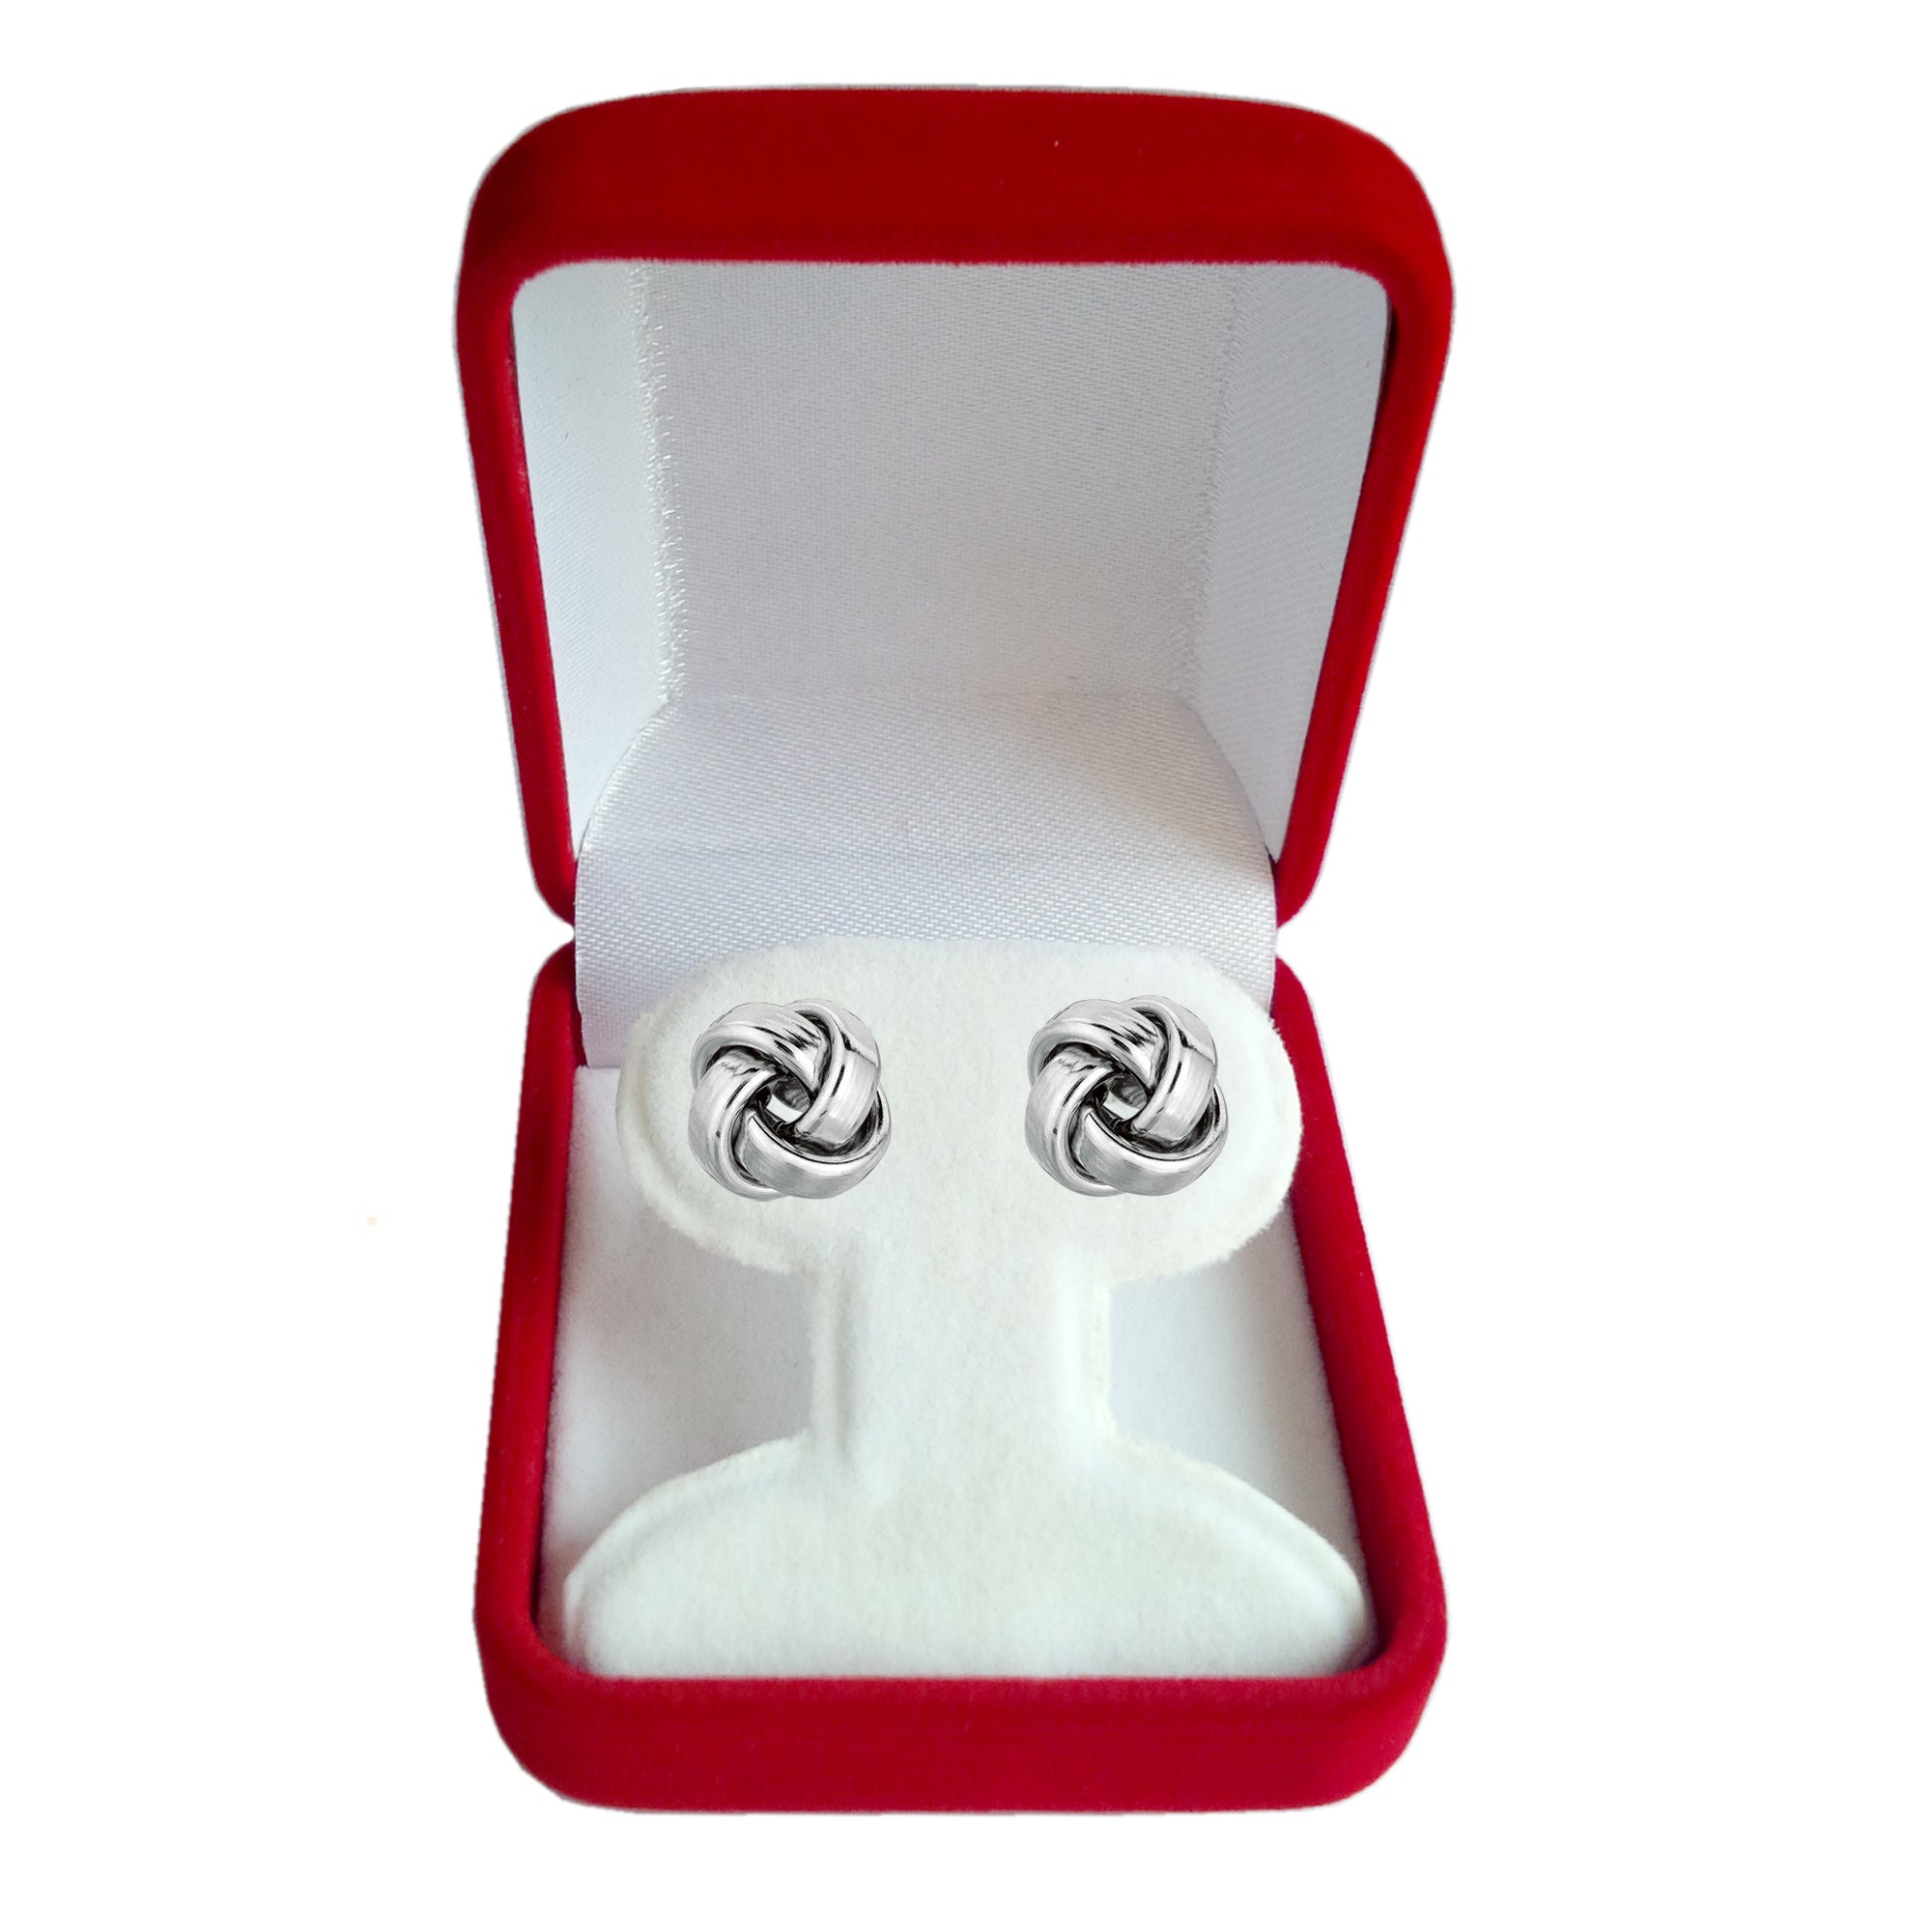 14k Gold Shiny Square Tube Love Knot Stud Earrings, 10mm fine designer jewelry for men and women